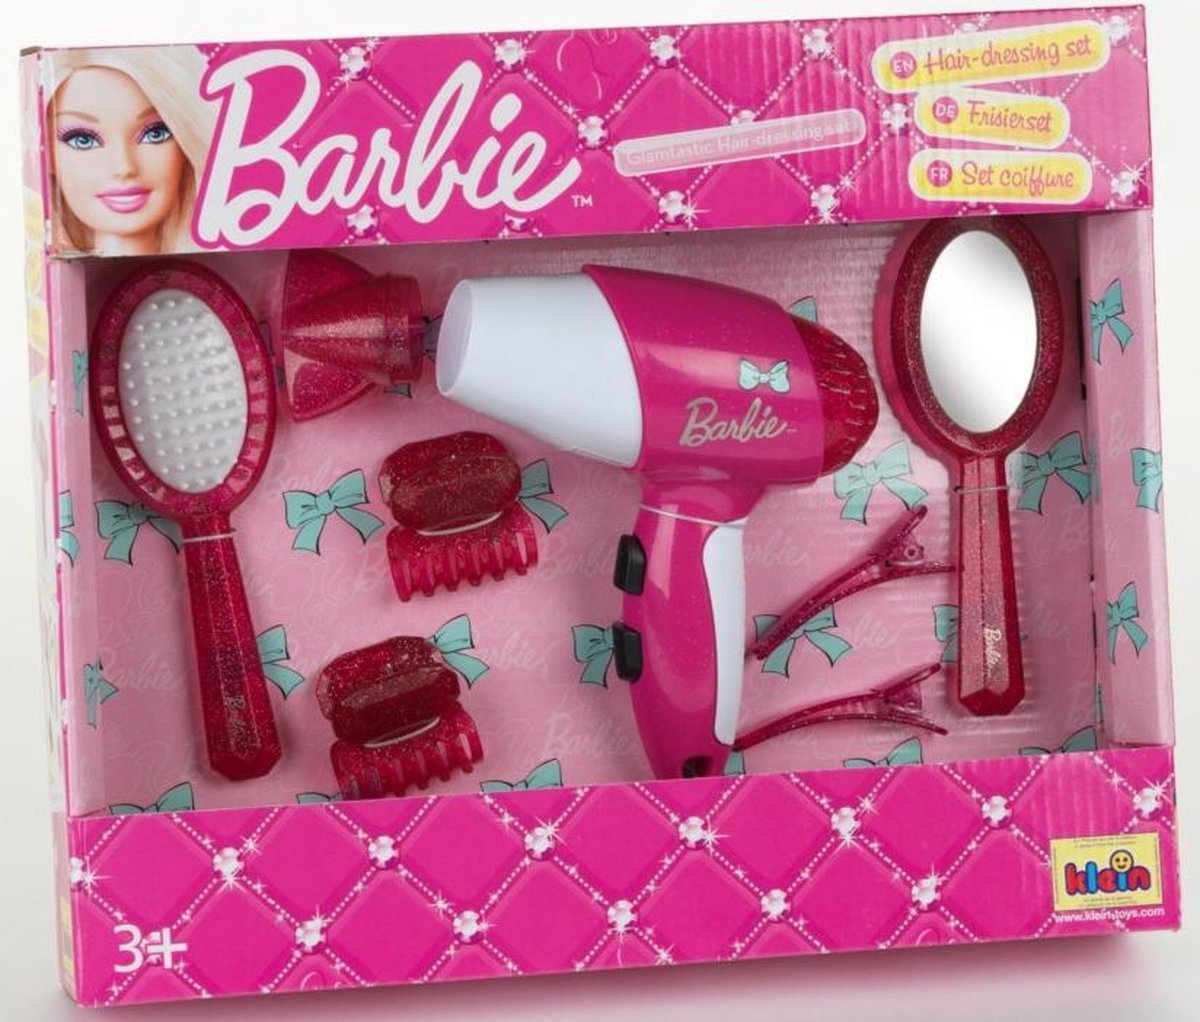 Barbie Klein kapperset met föhn en accessoires 7 delig - Roze